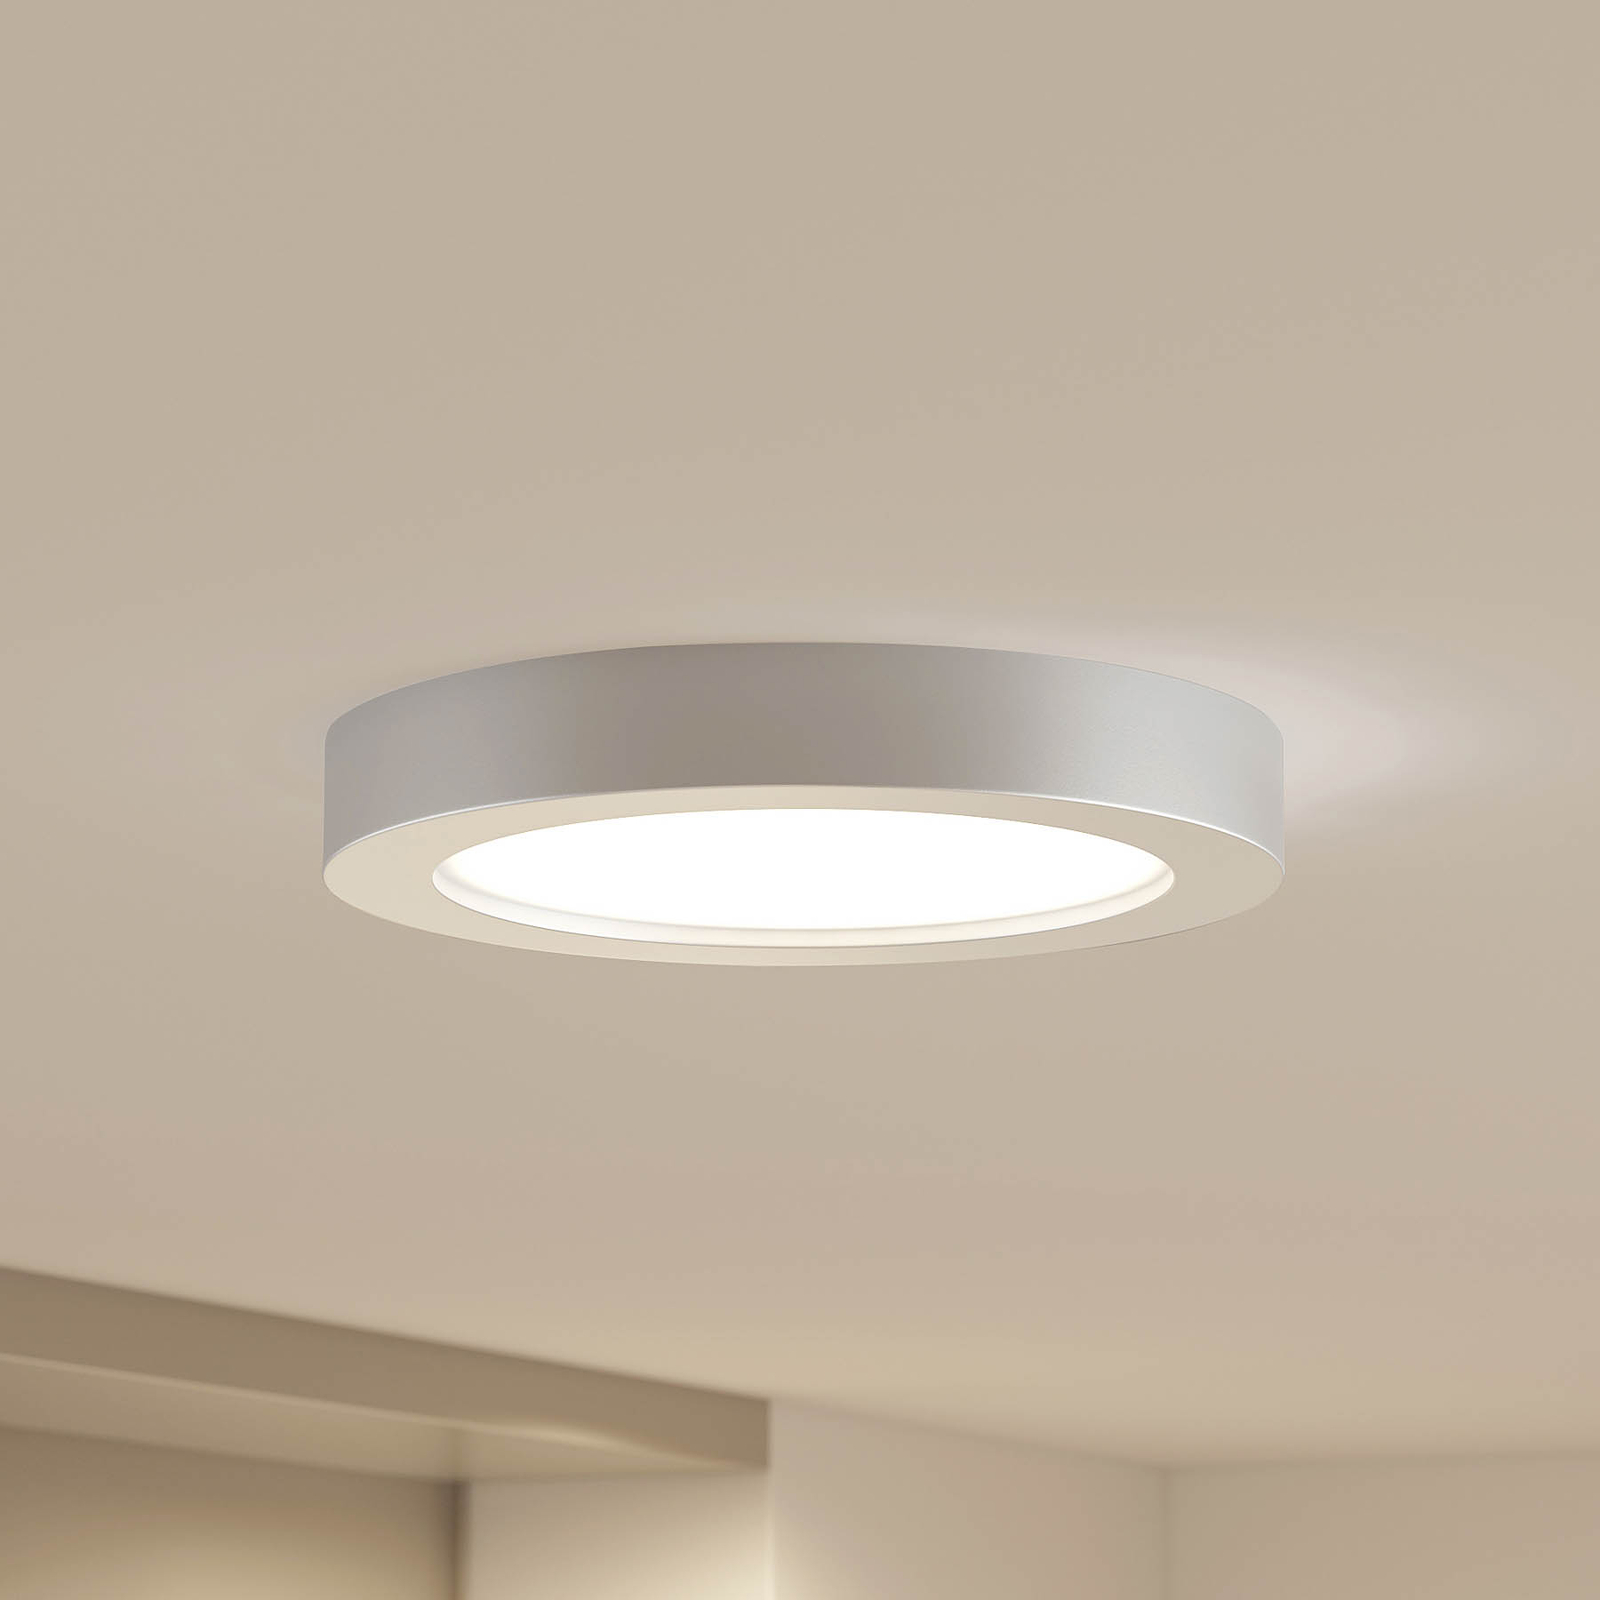 Prios Edwina LED ceiling light, silver, 24.5 cm